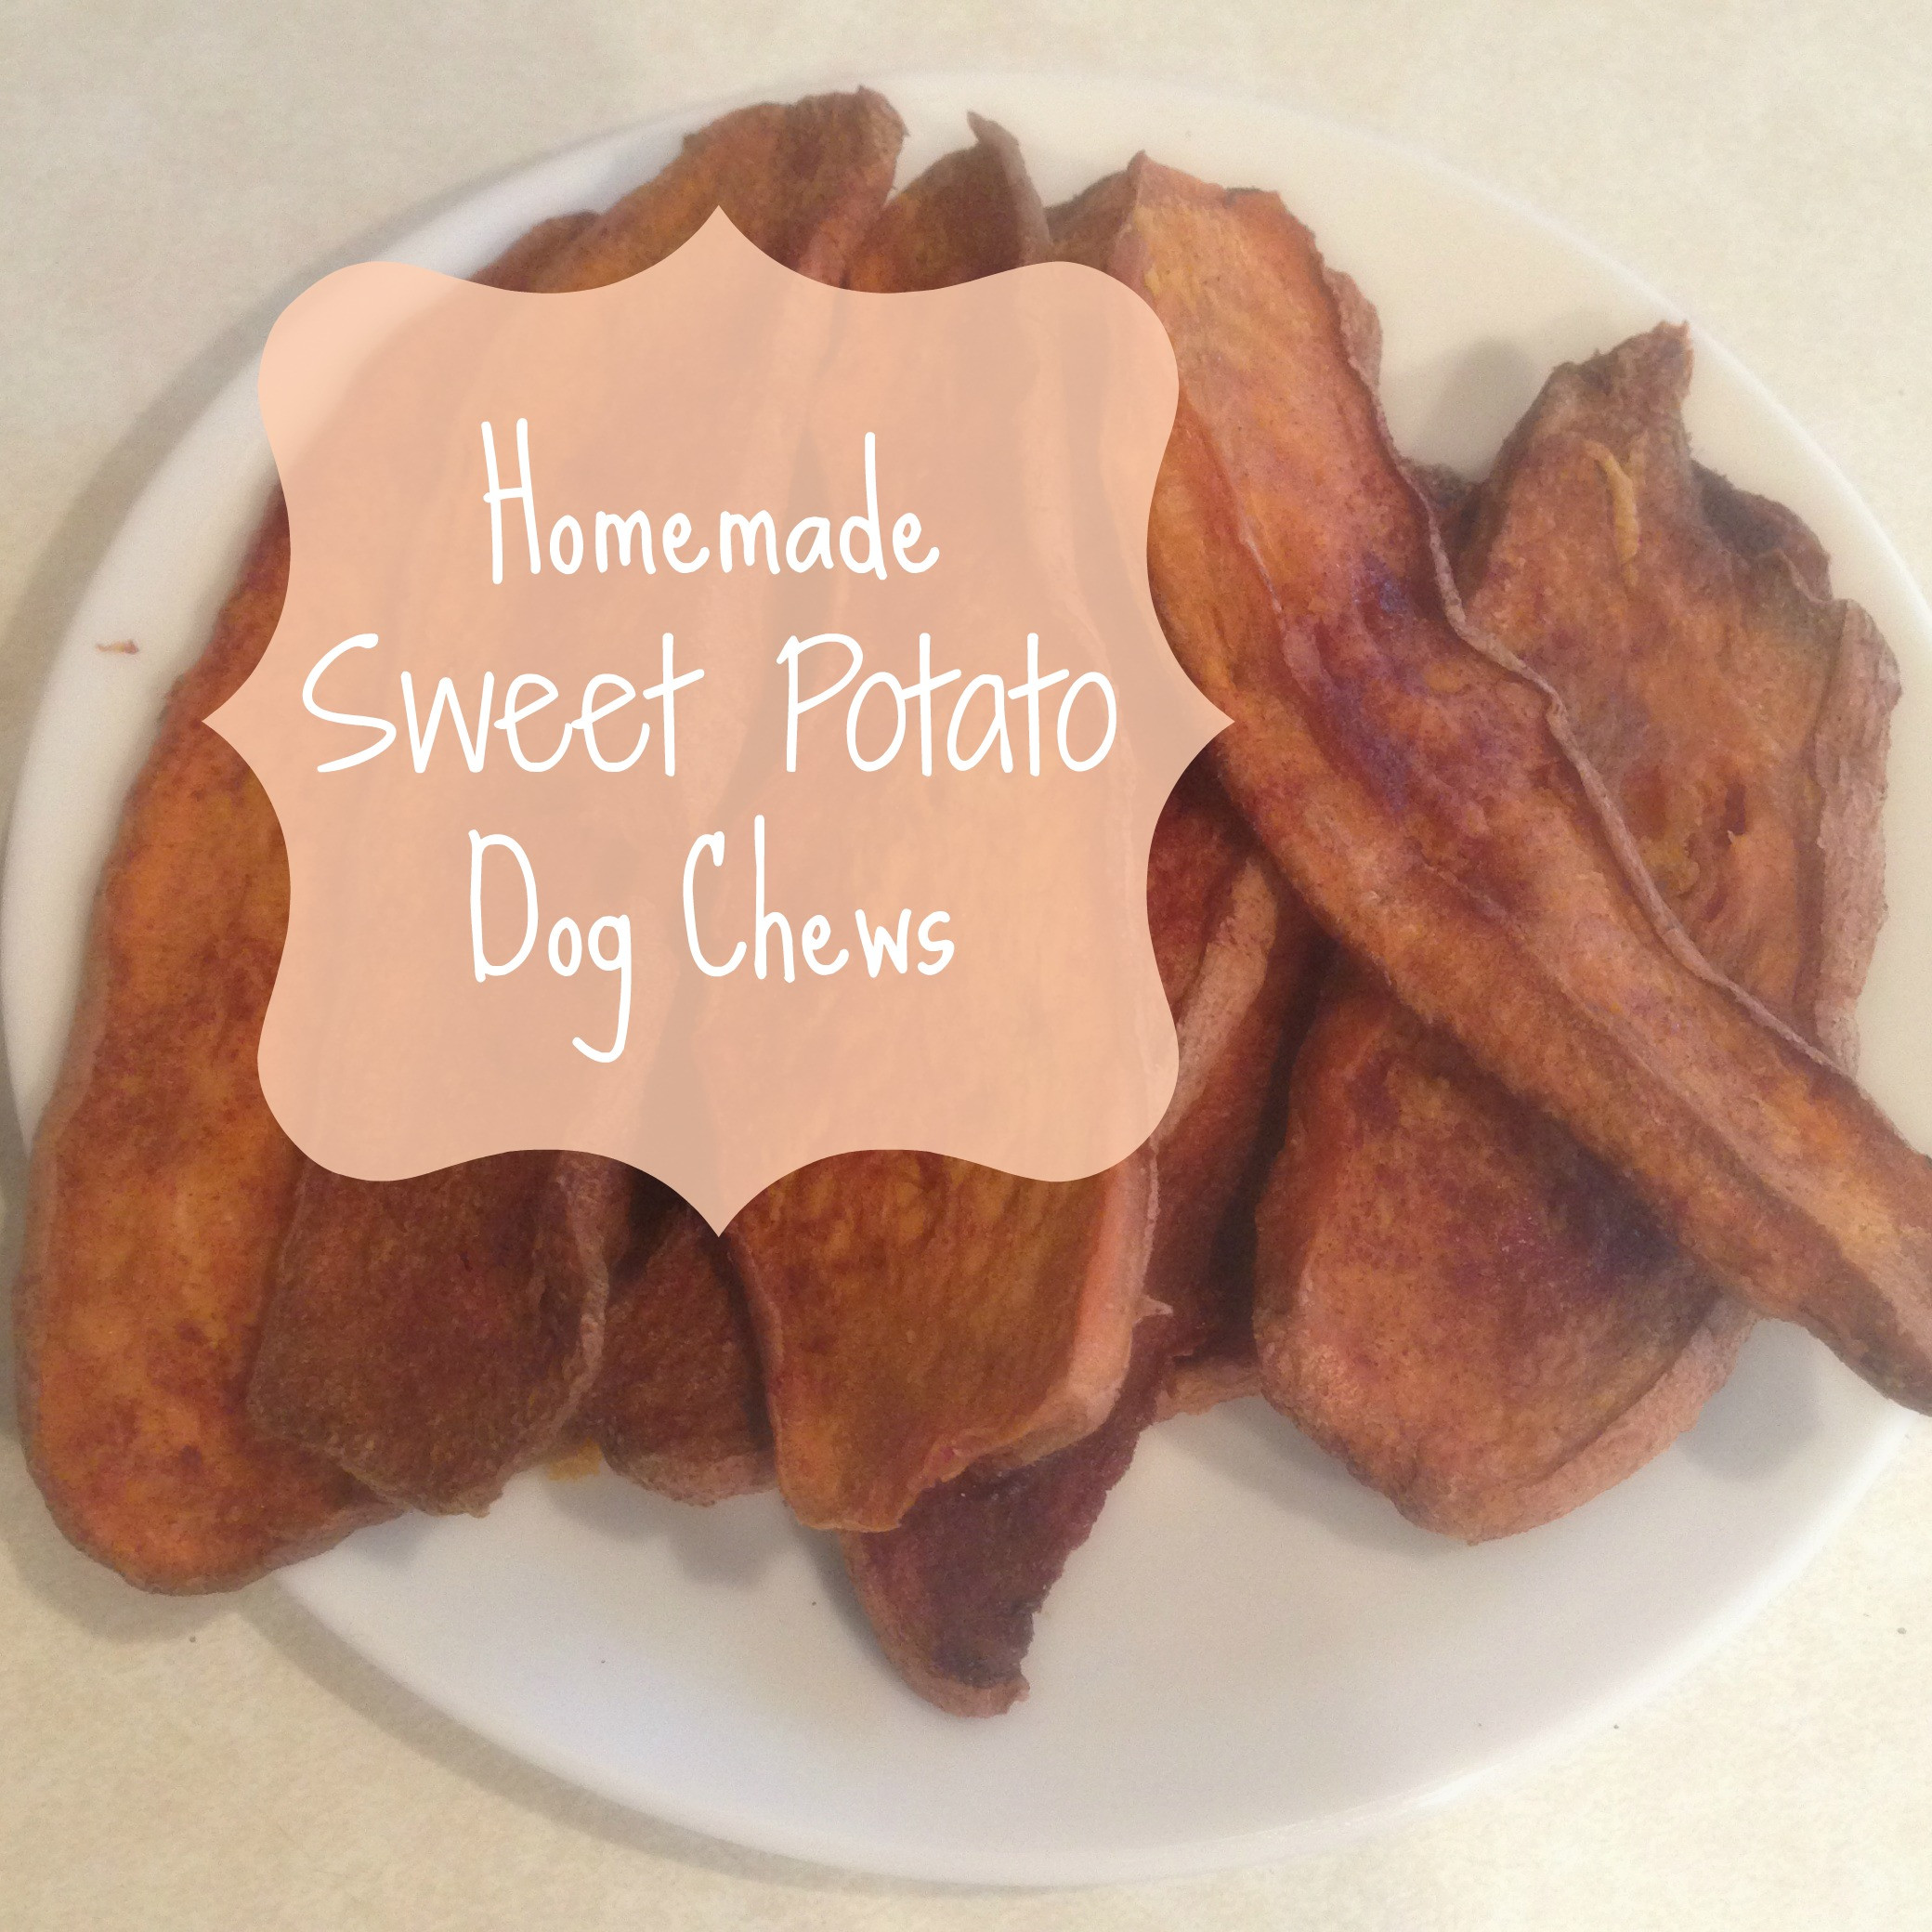 DIY Sweet Potato Dog Treats
 Homemade Sweet Potato Dog Chews